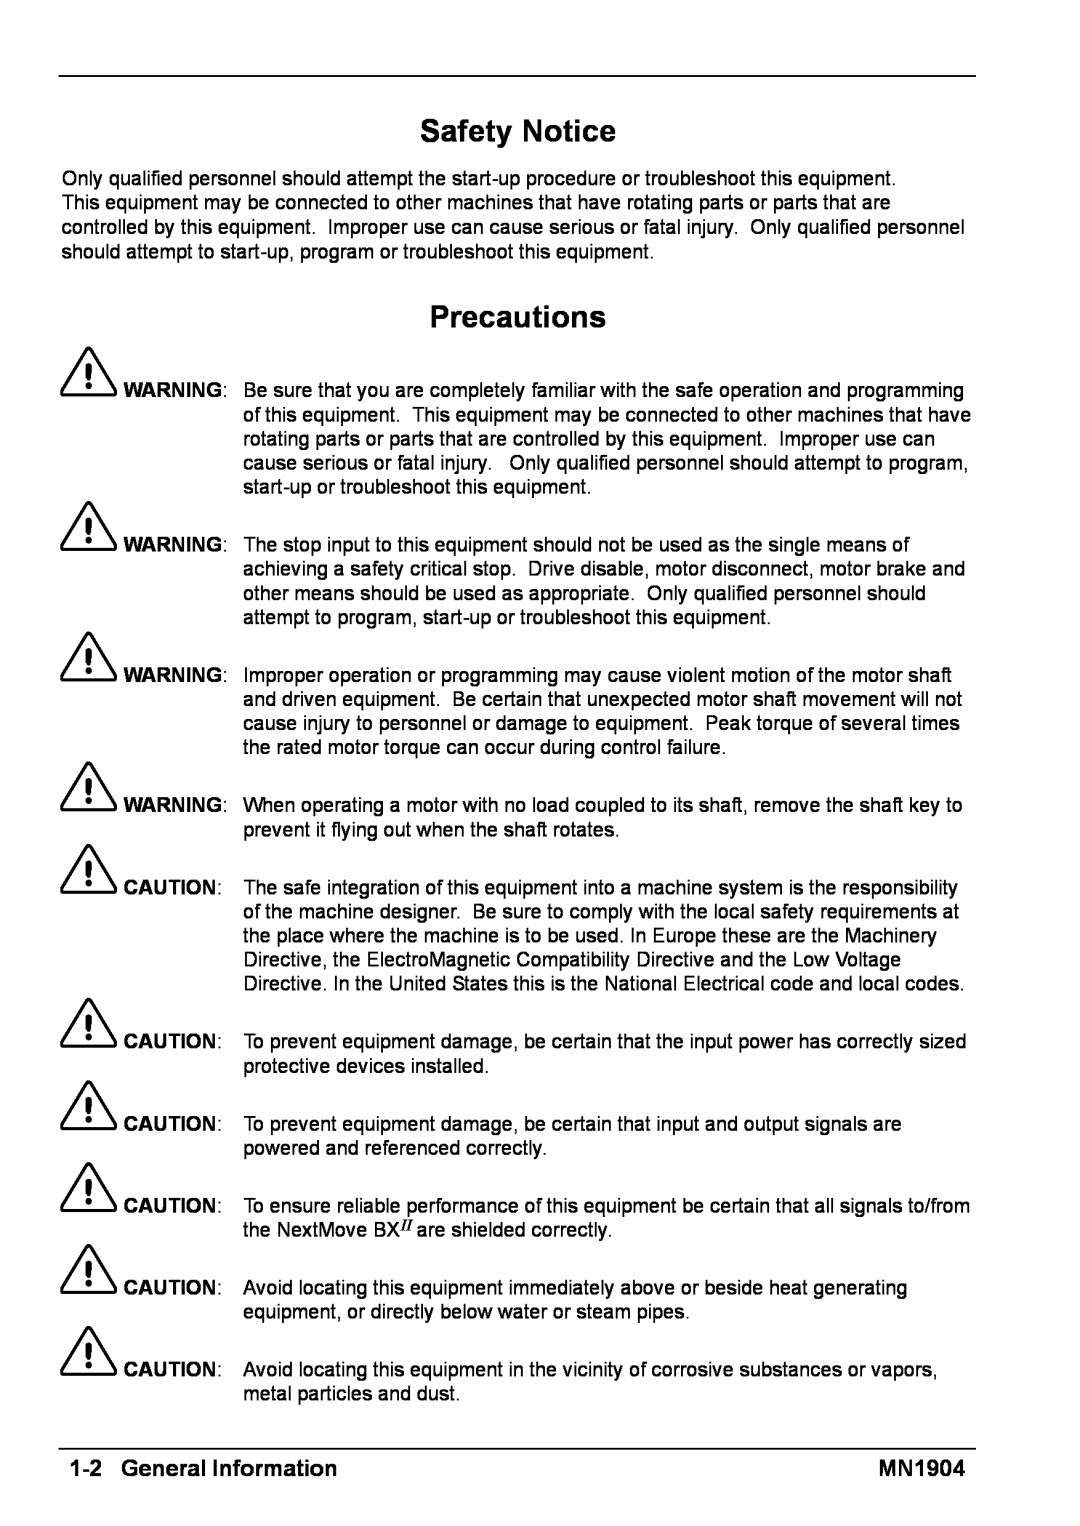 Baldor BXII installation manual Safety Notice, Precautions, 1-2General Information, MN1904 